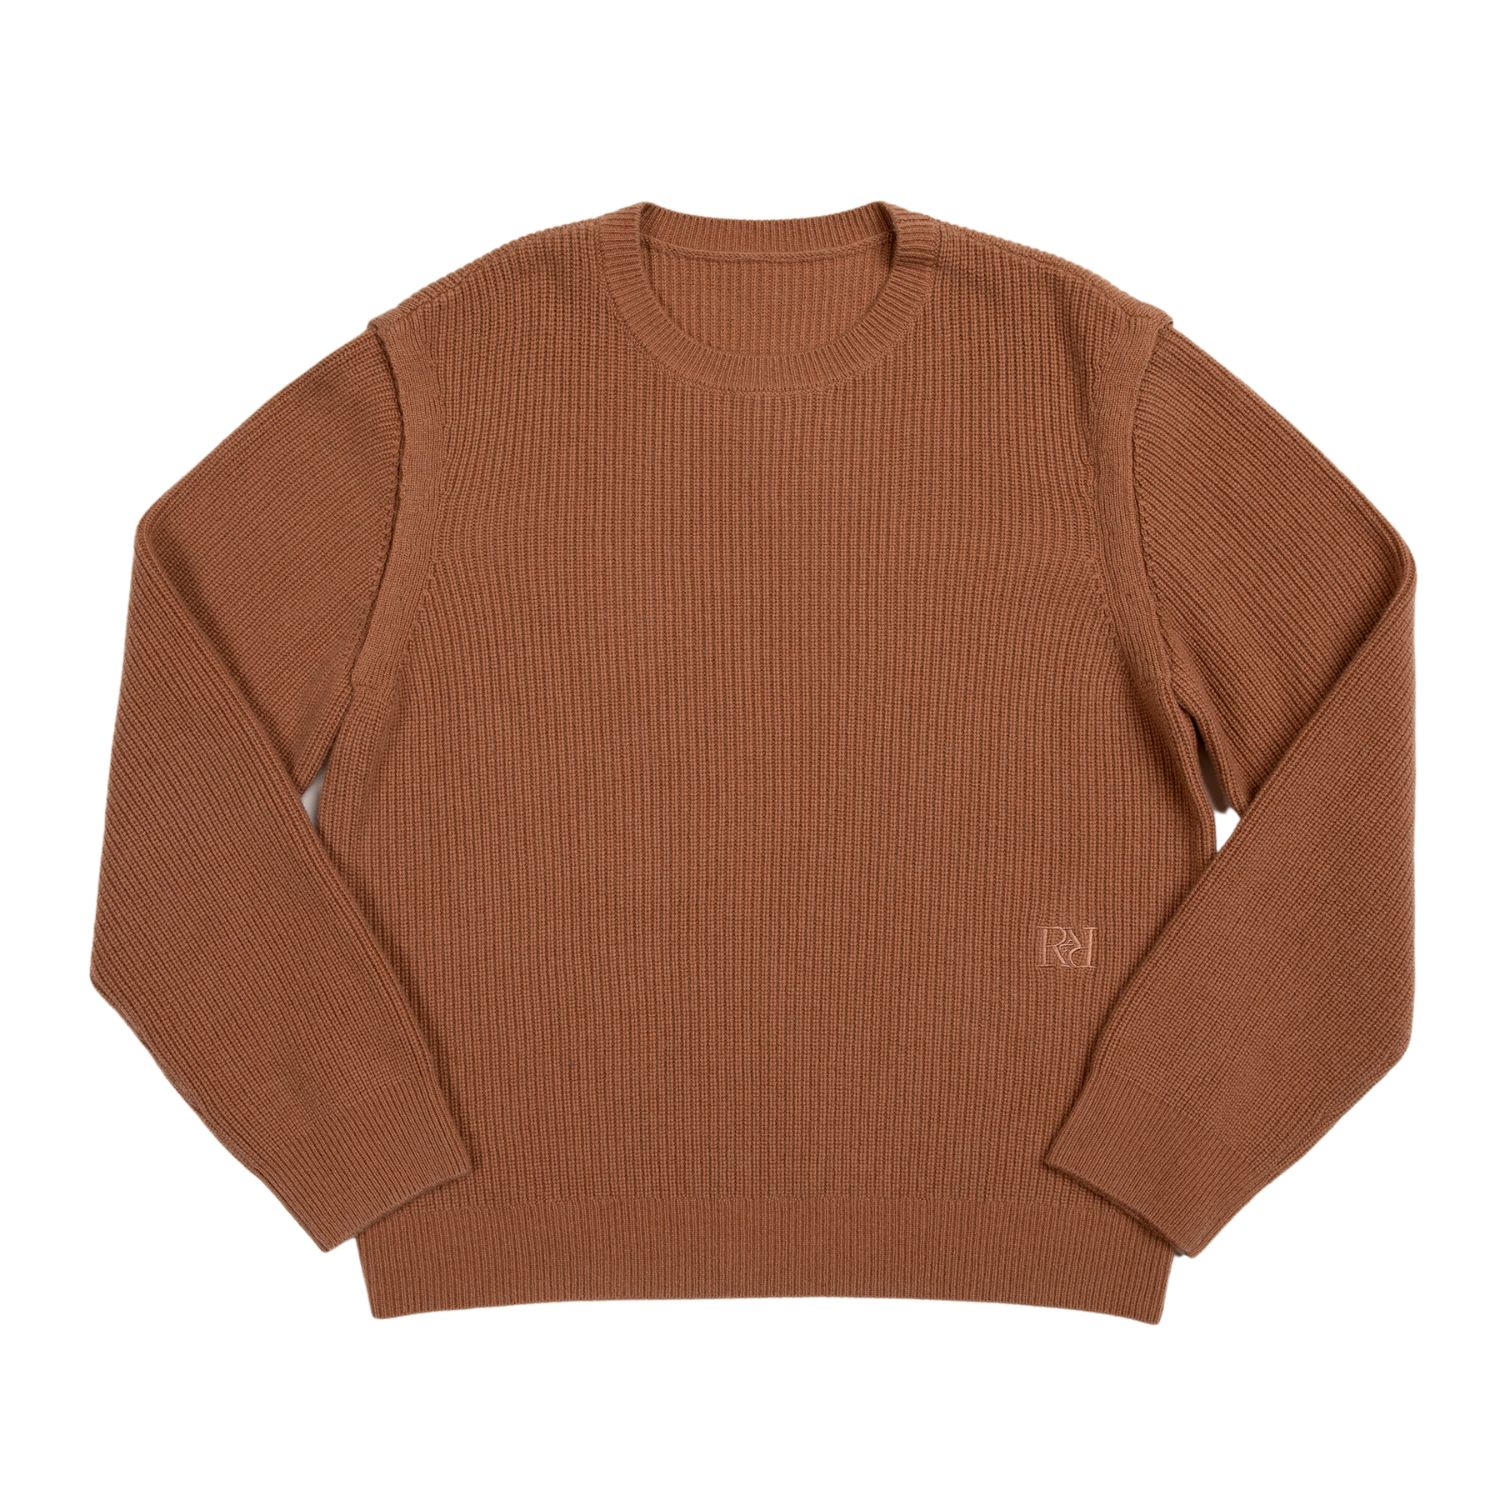 Women’s Brown Convertible Cashmere Sweater - Toast Medium Rest & Relax